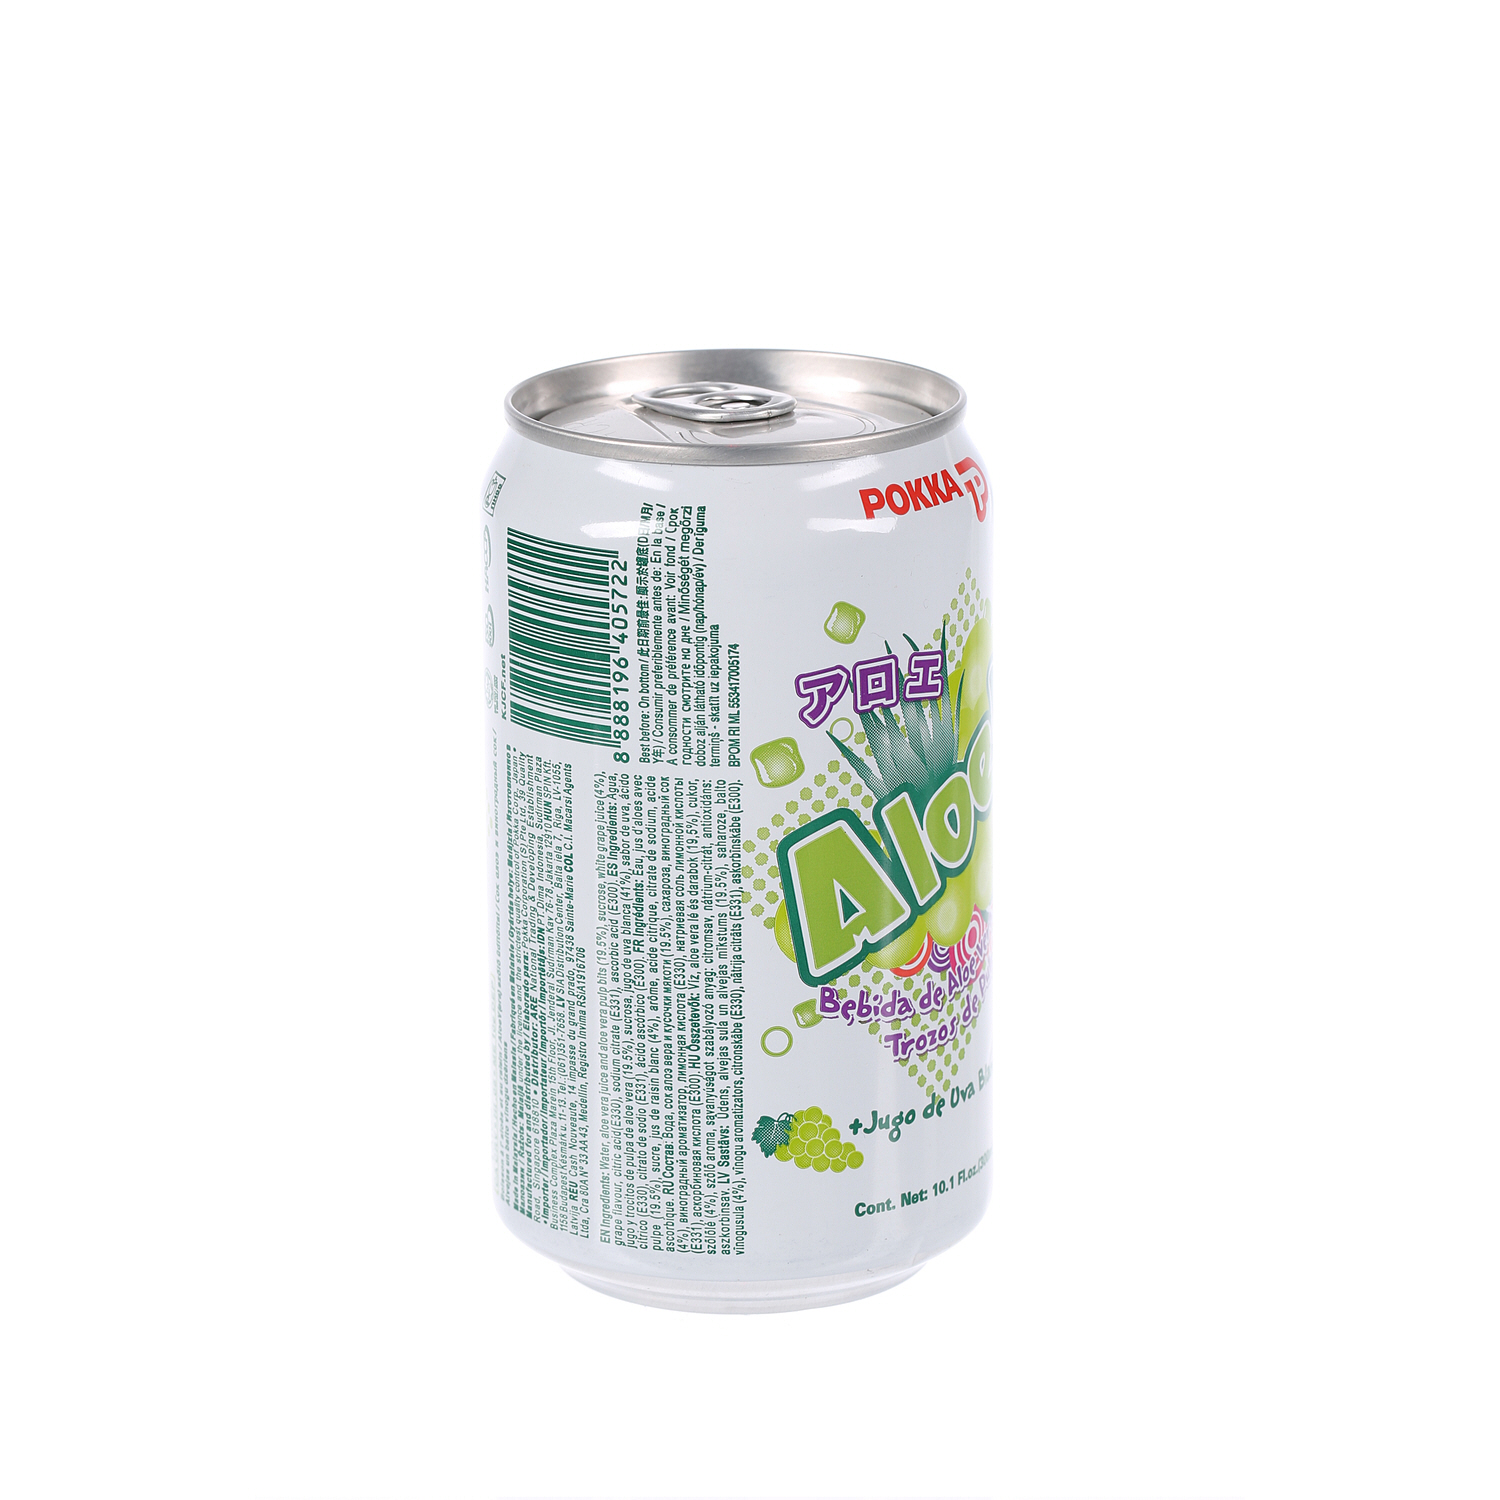 Pokka Aloevera Grape Juice 300ml